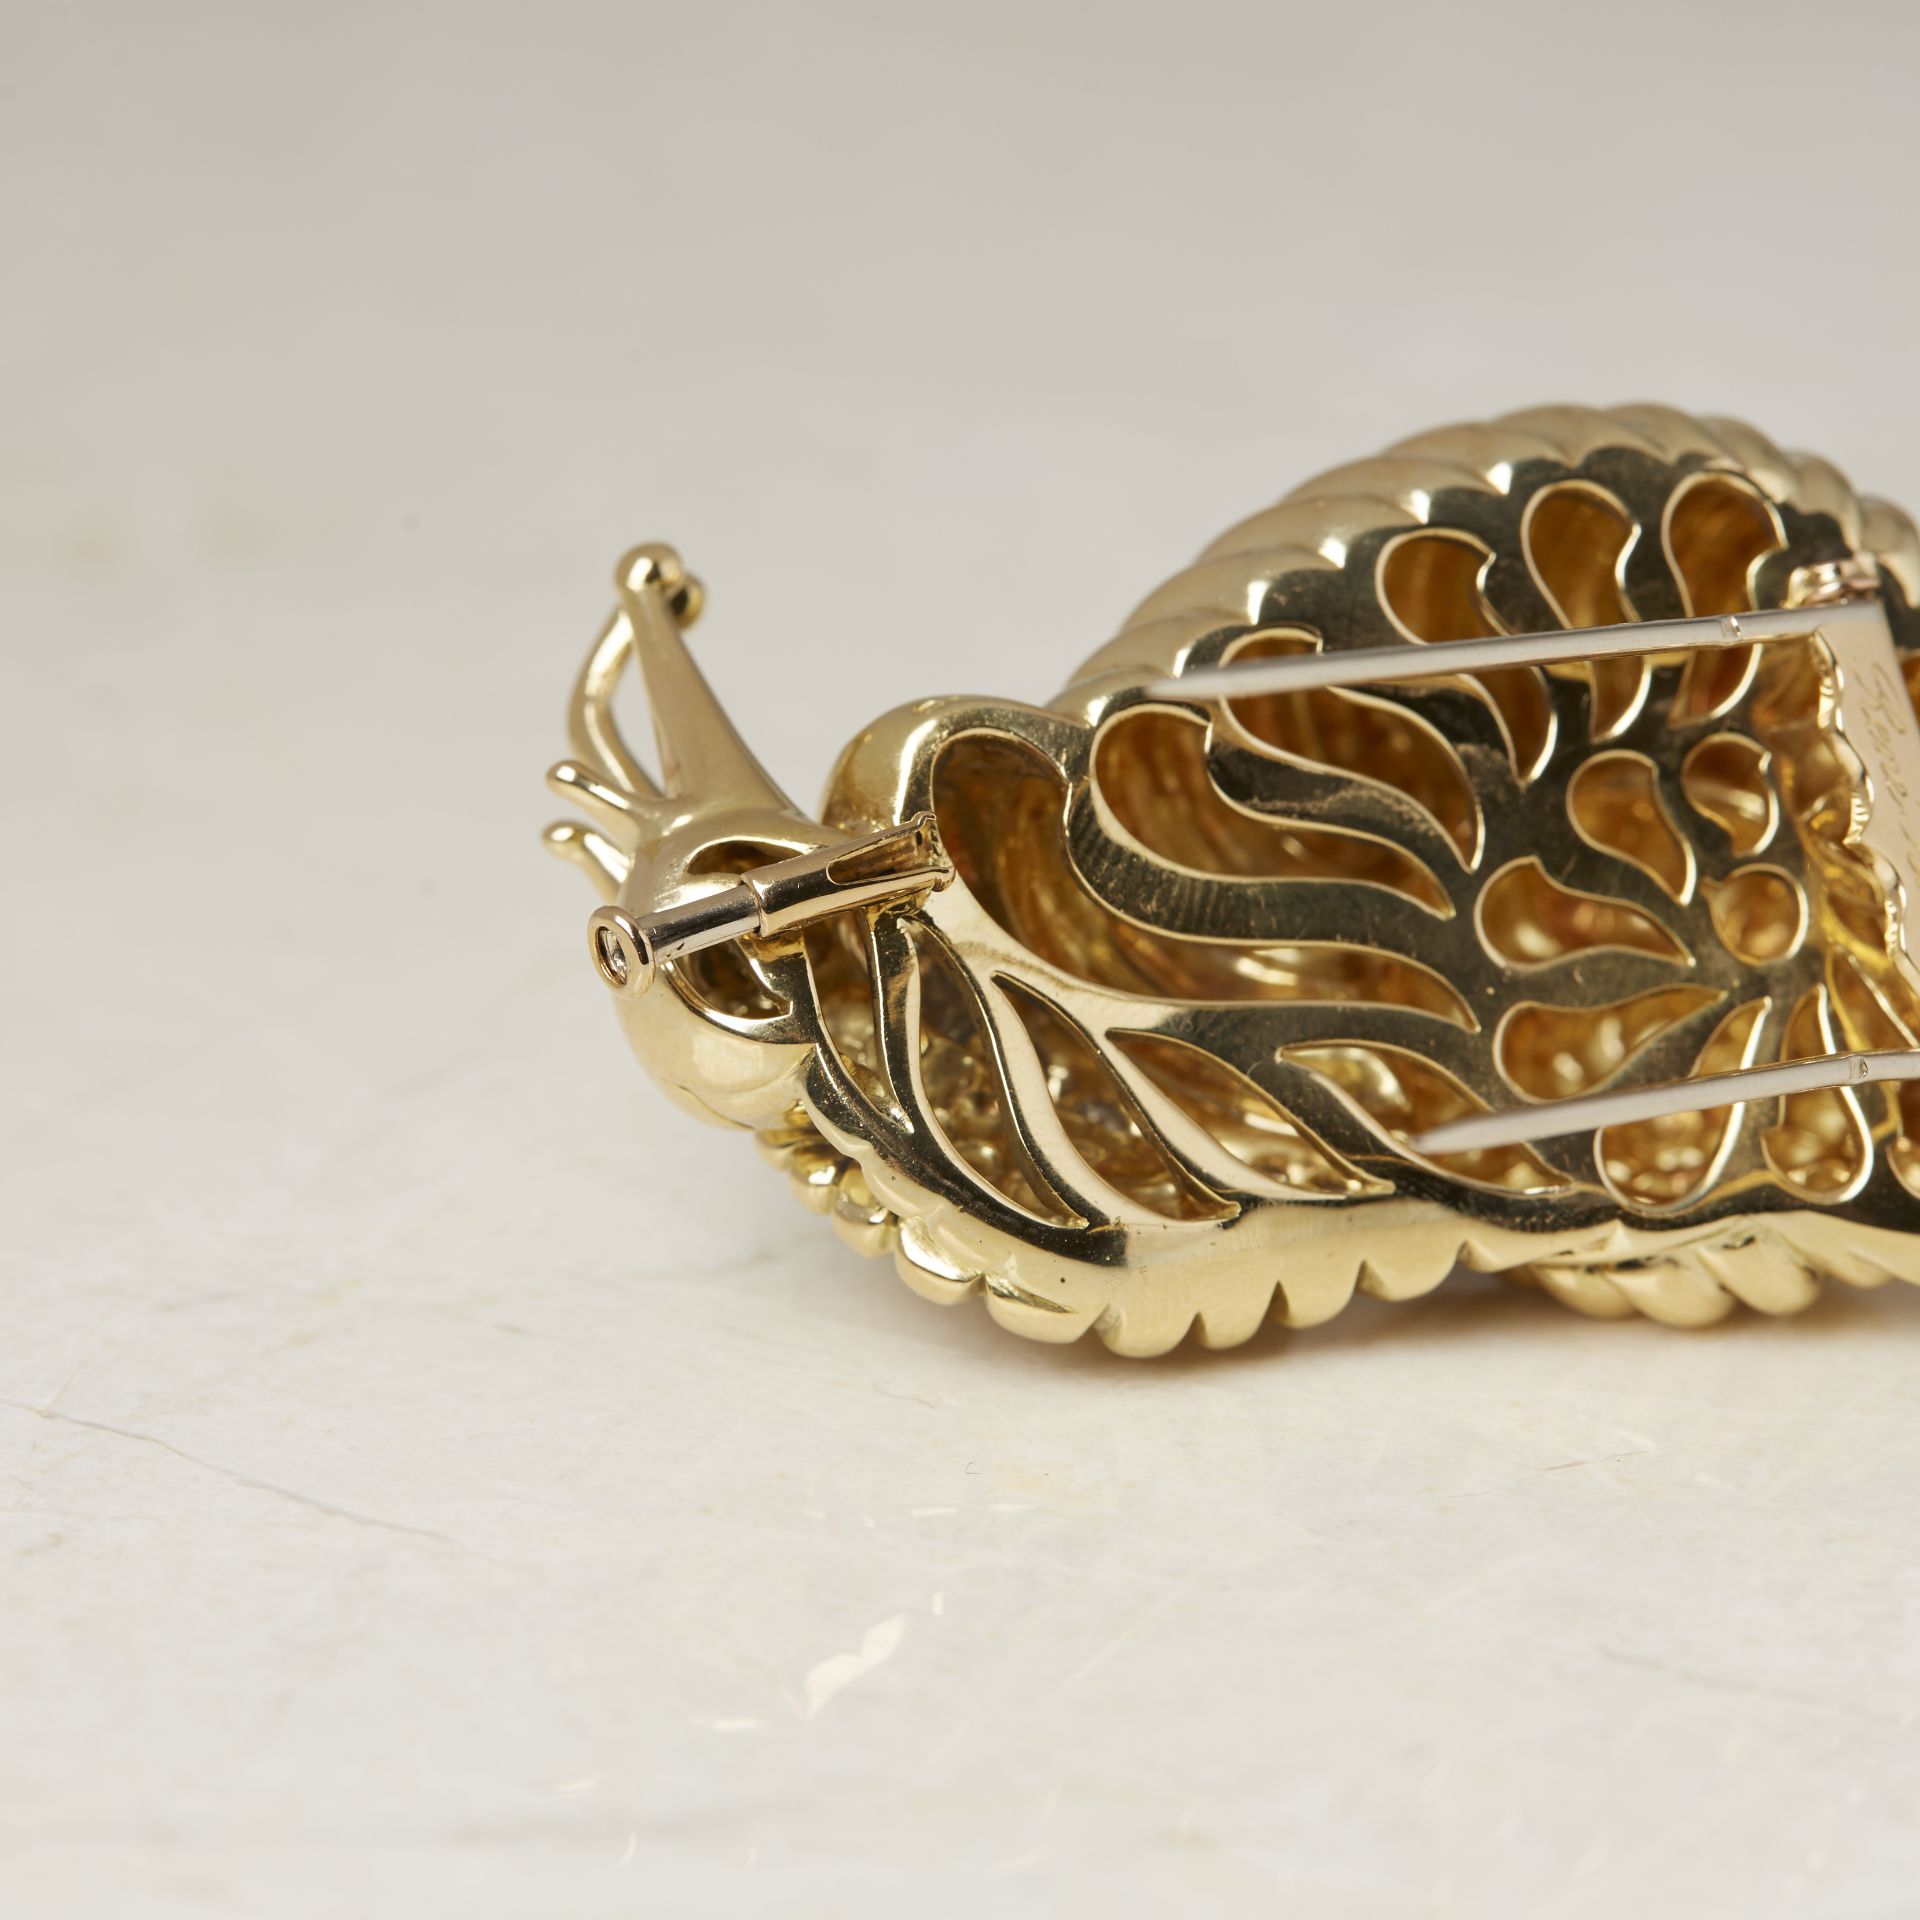 Rene Boivin 18k Yellow Gold Diamond Snail Brooch with Presentation Box - Image 11 of 19